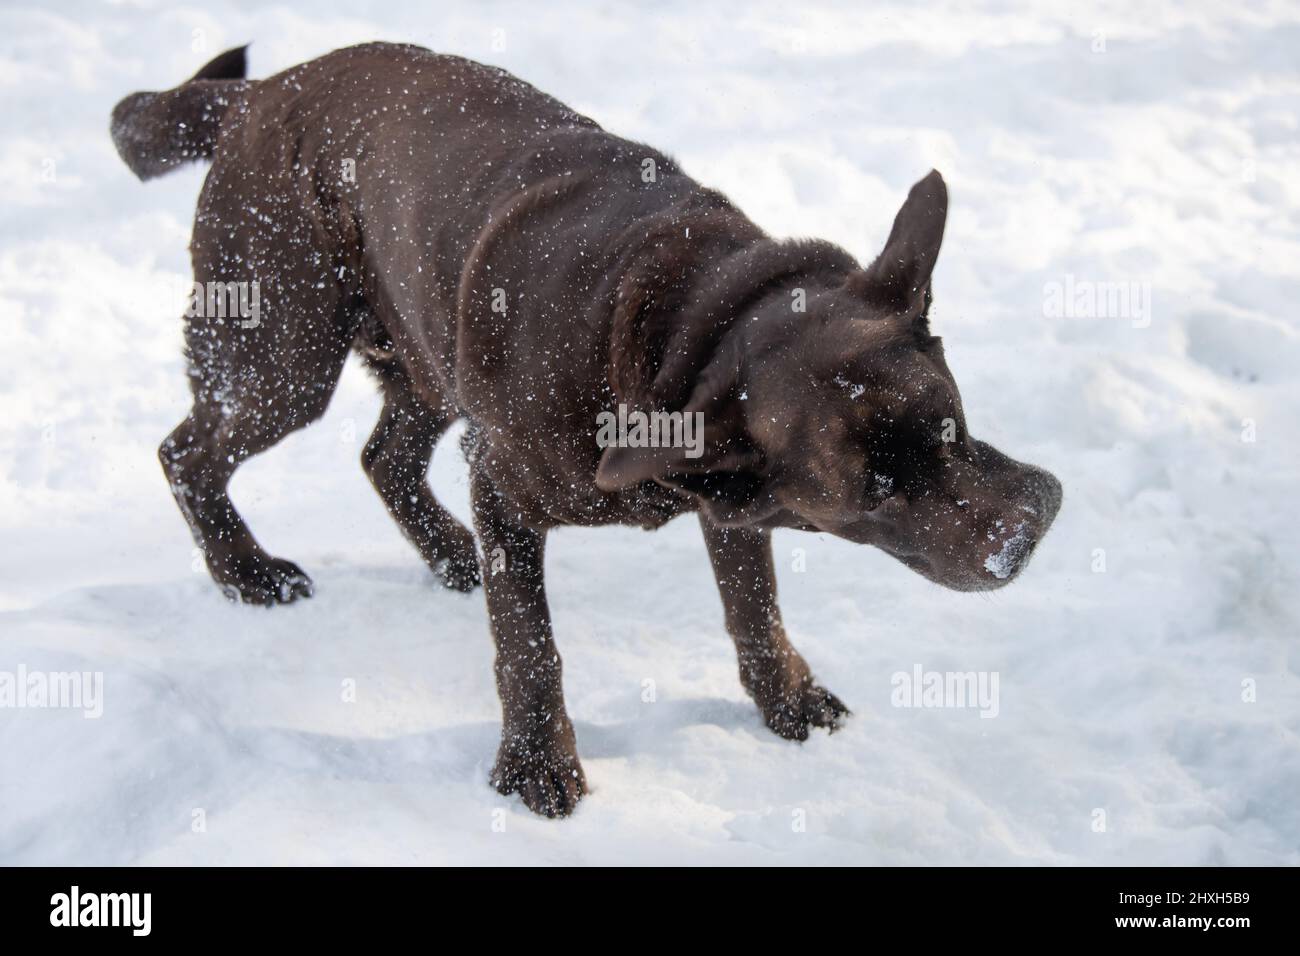 A chocolate Labrador Retriever shaking off snow on a winter playground. Stock Photo